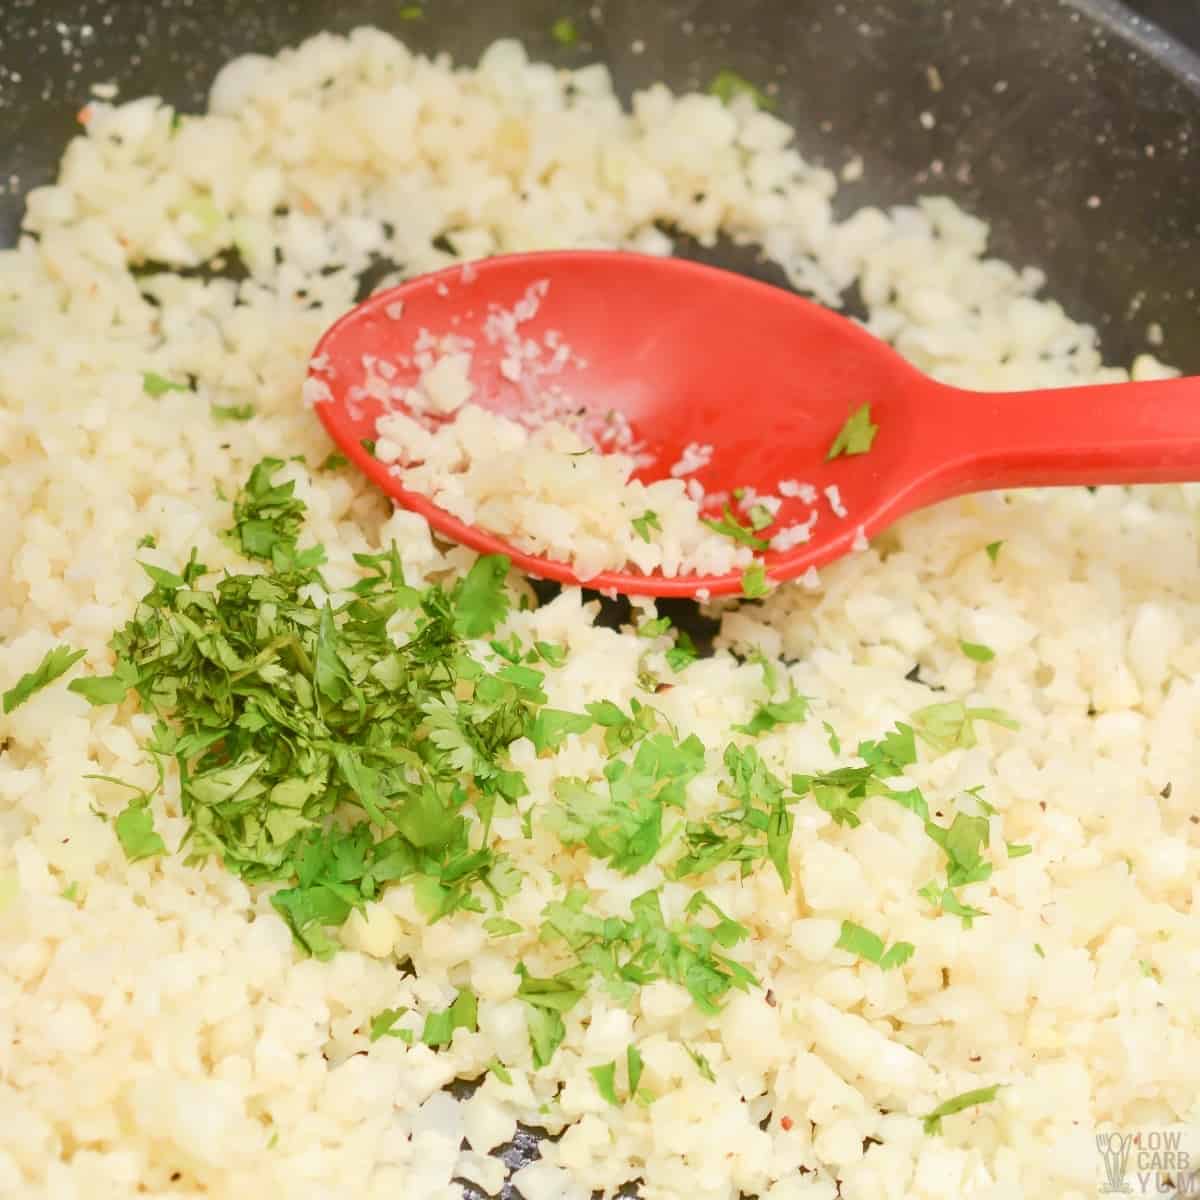 cilantro added to cauliflower rice in pan